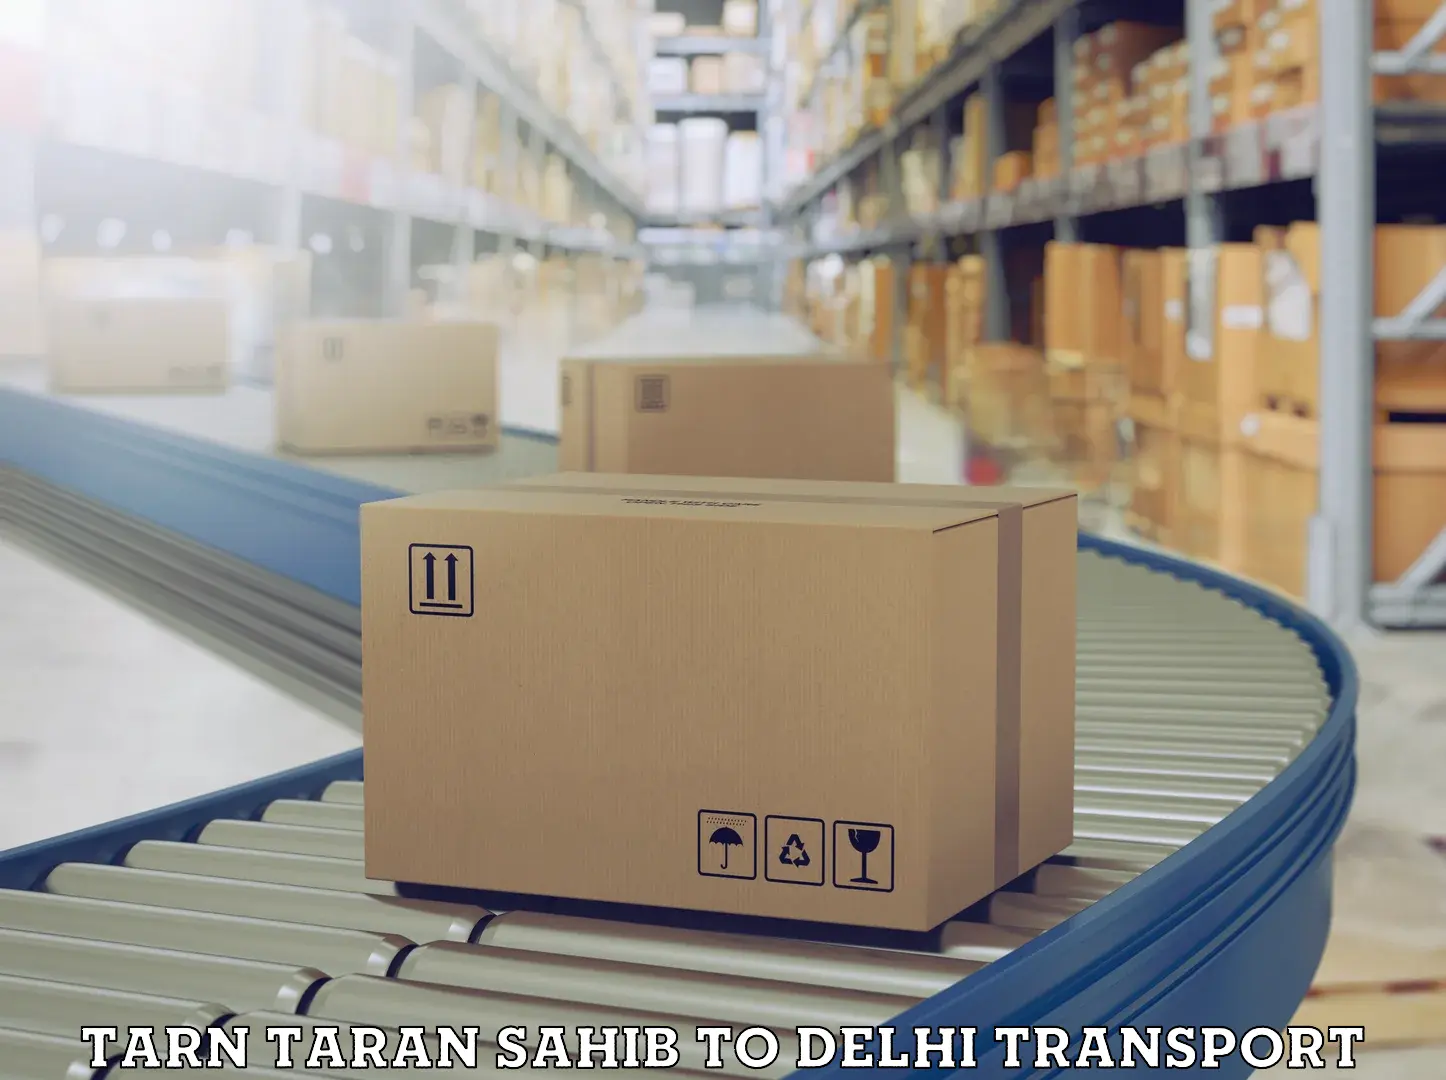 Bike shipping service Tarn Taran Sahib to Delhi